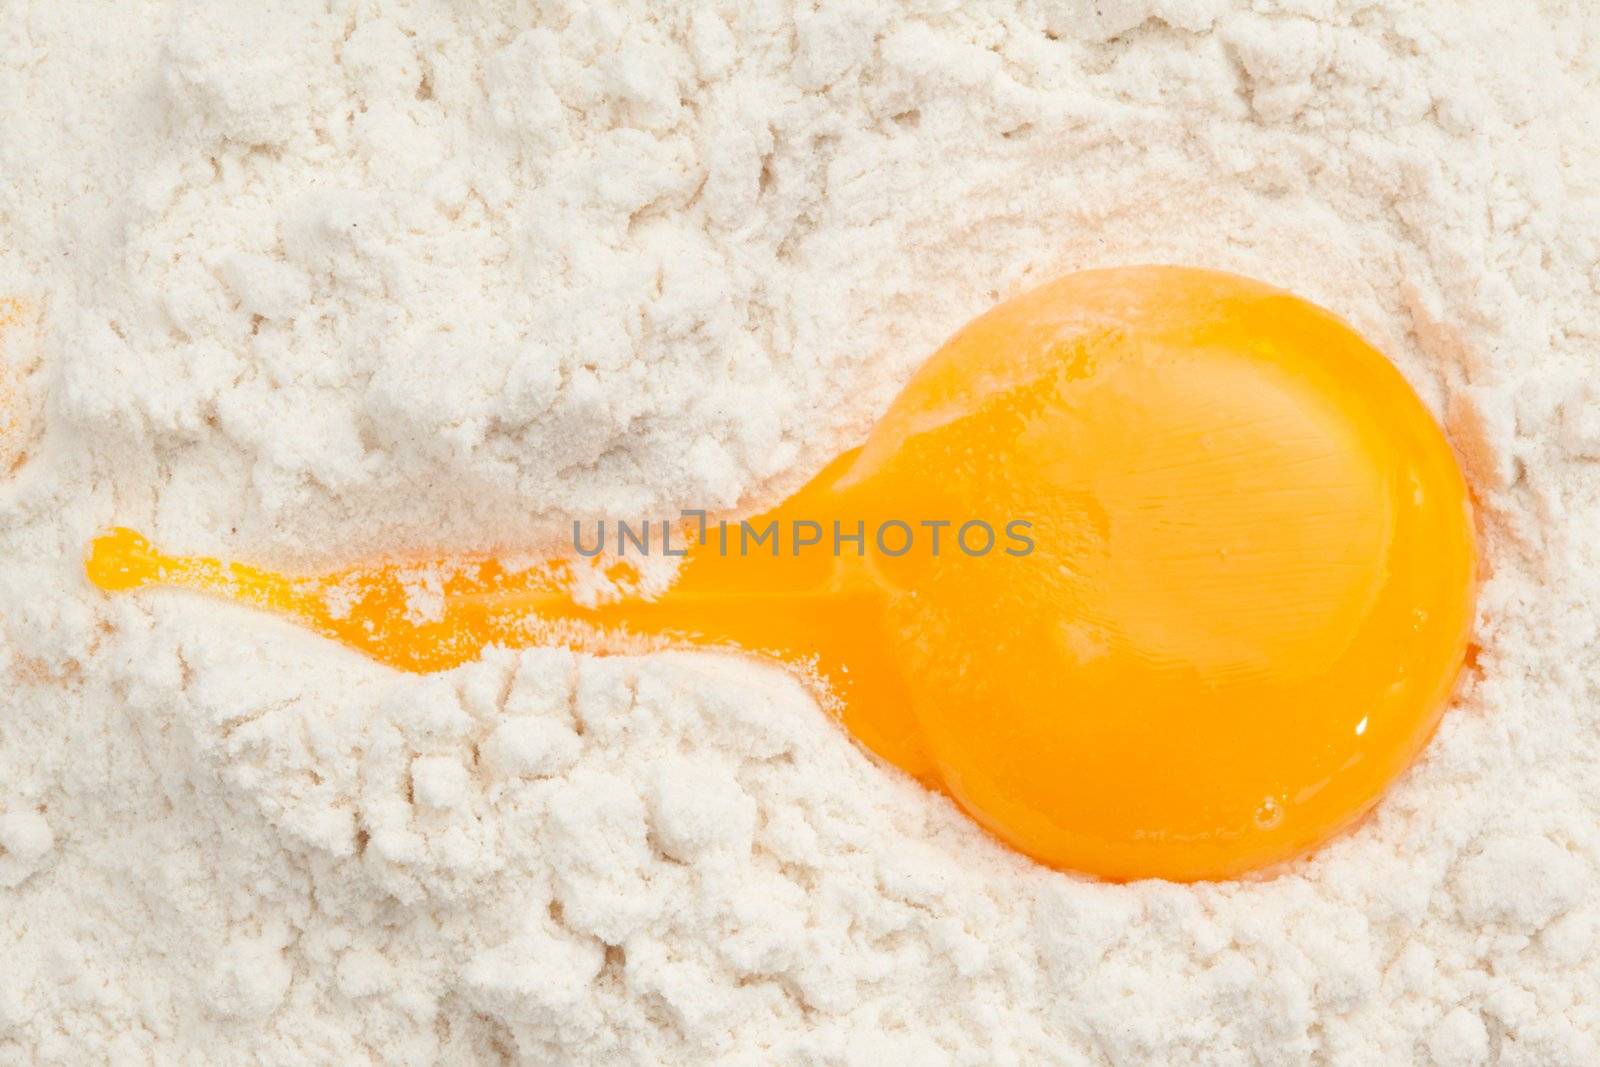 Egg yolk on the flour by Wavebreakmedia